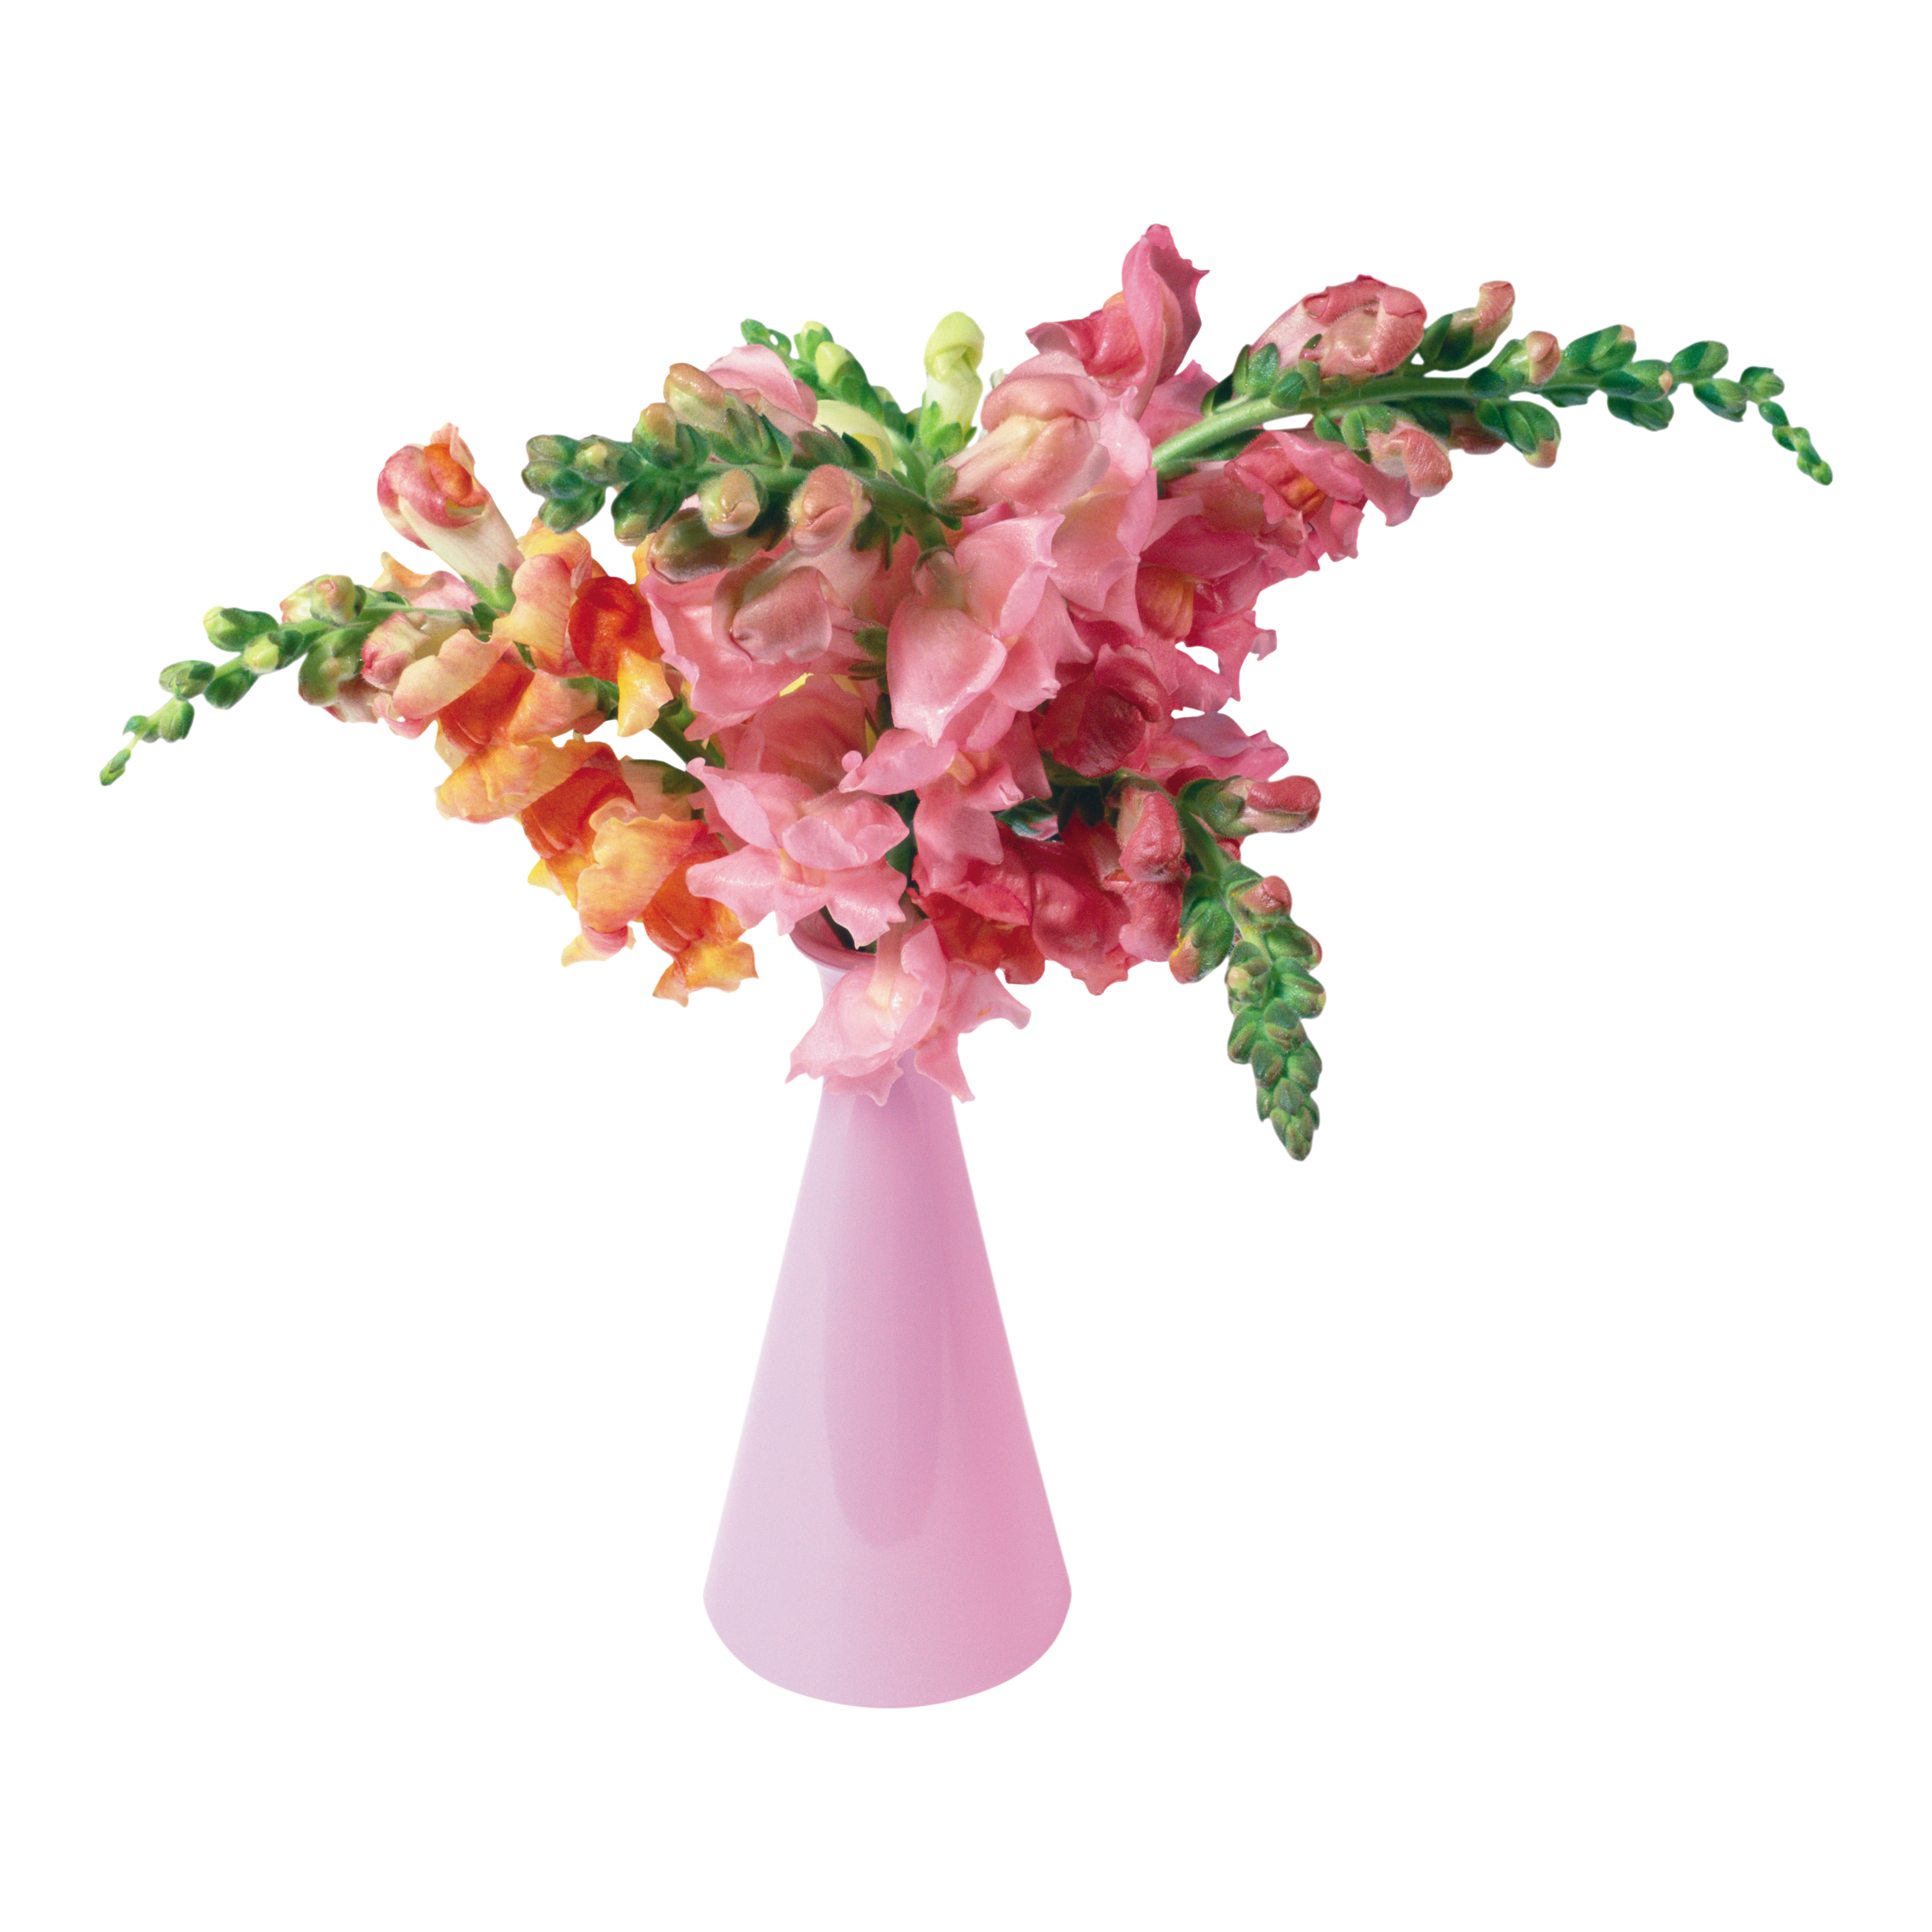 Flower Vase Transparent Gallery